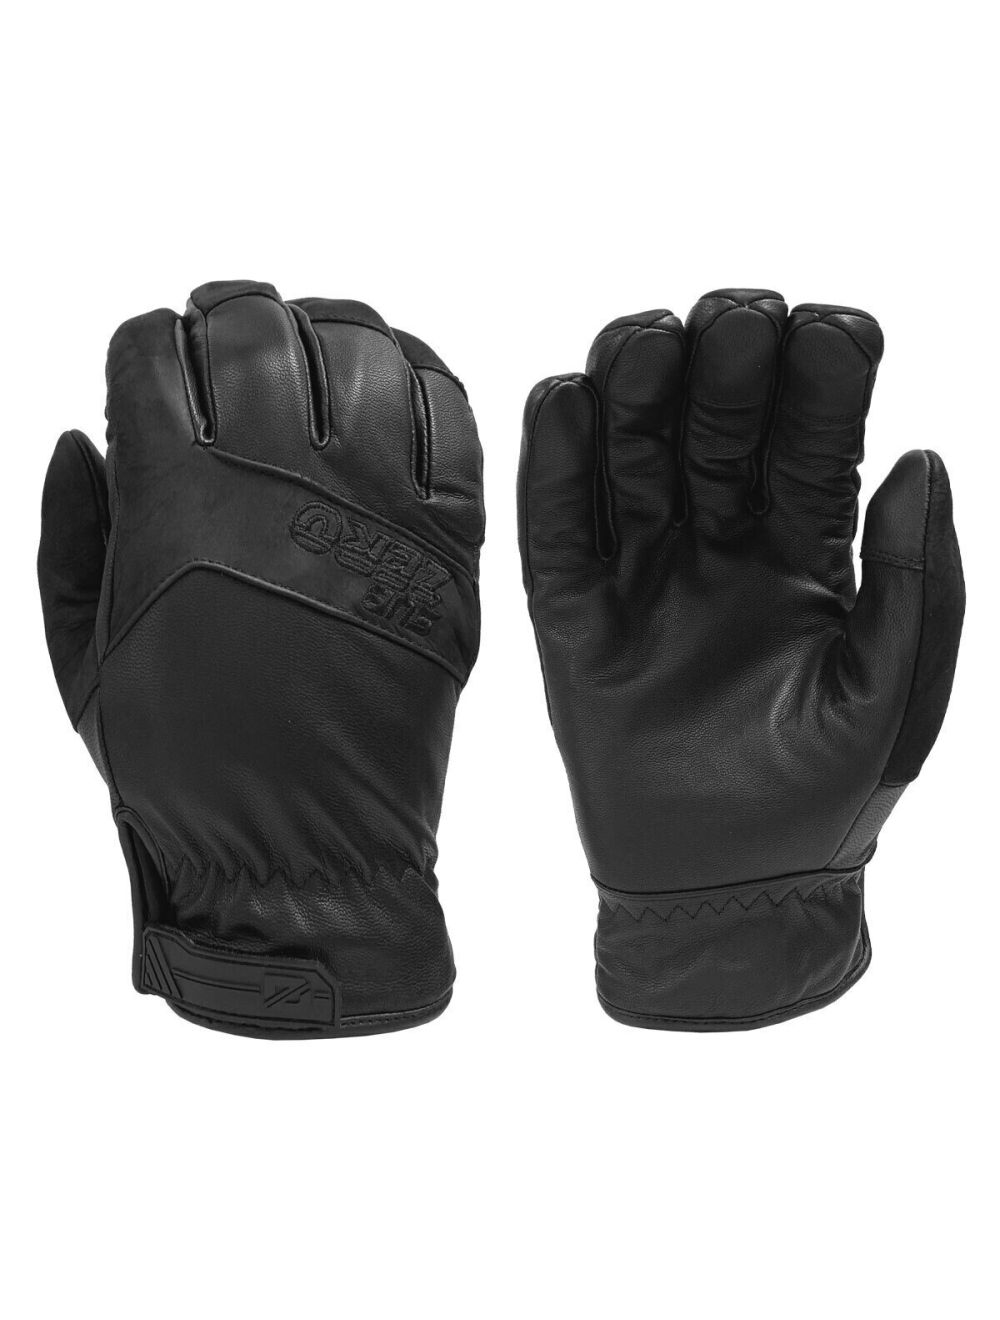 SubZero Ultimate Cold Weather Gloves